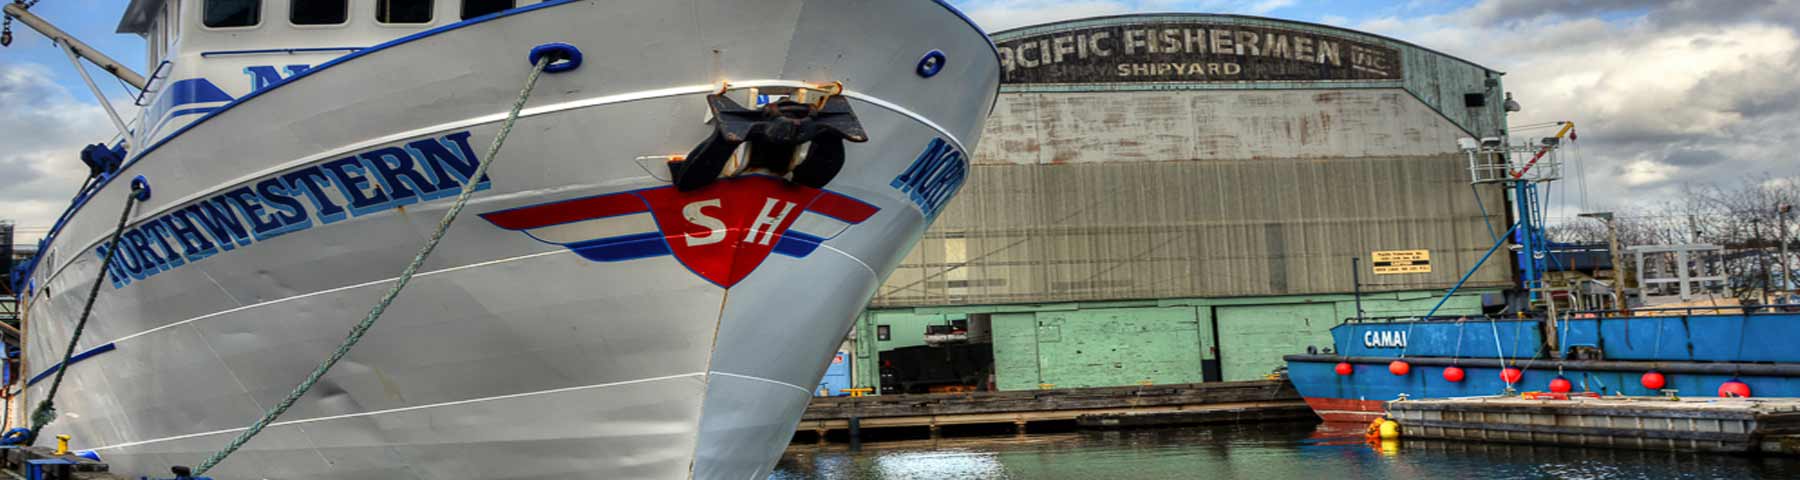 Puget Sound Shipbuilder's Association Members List